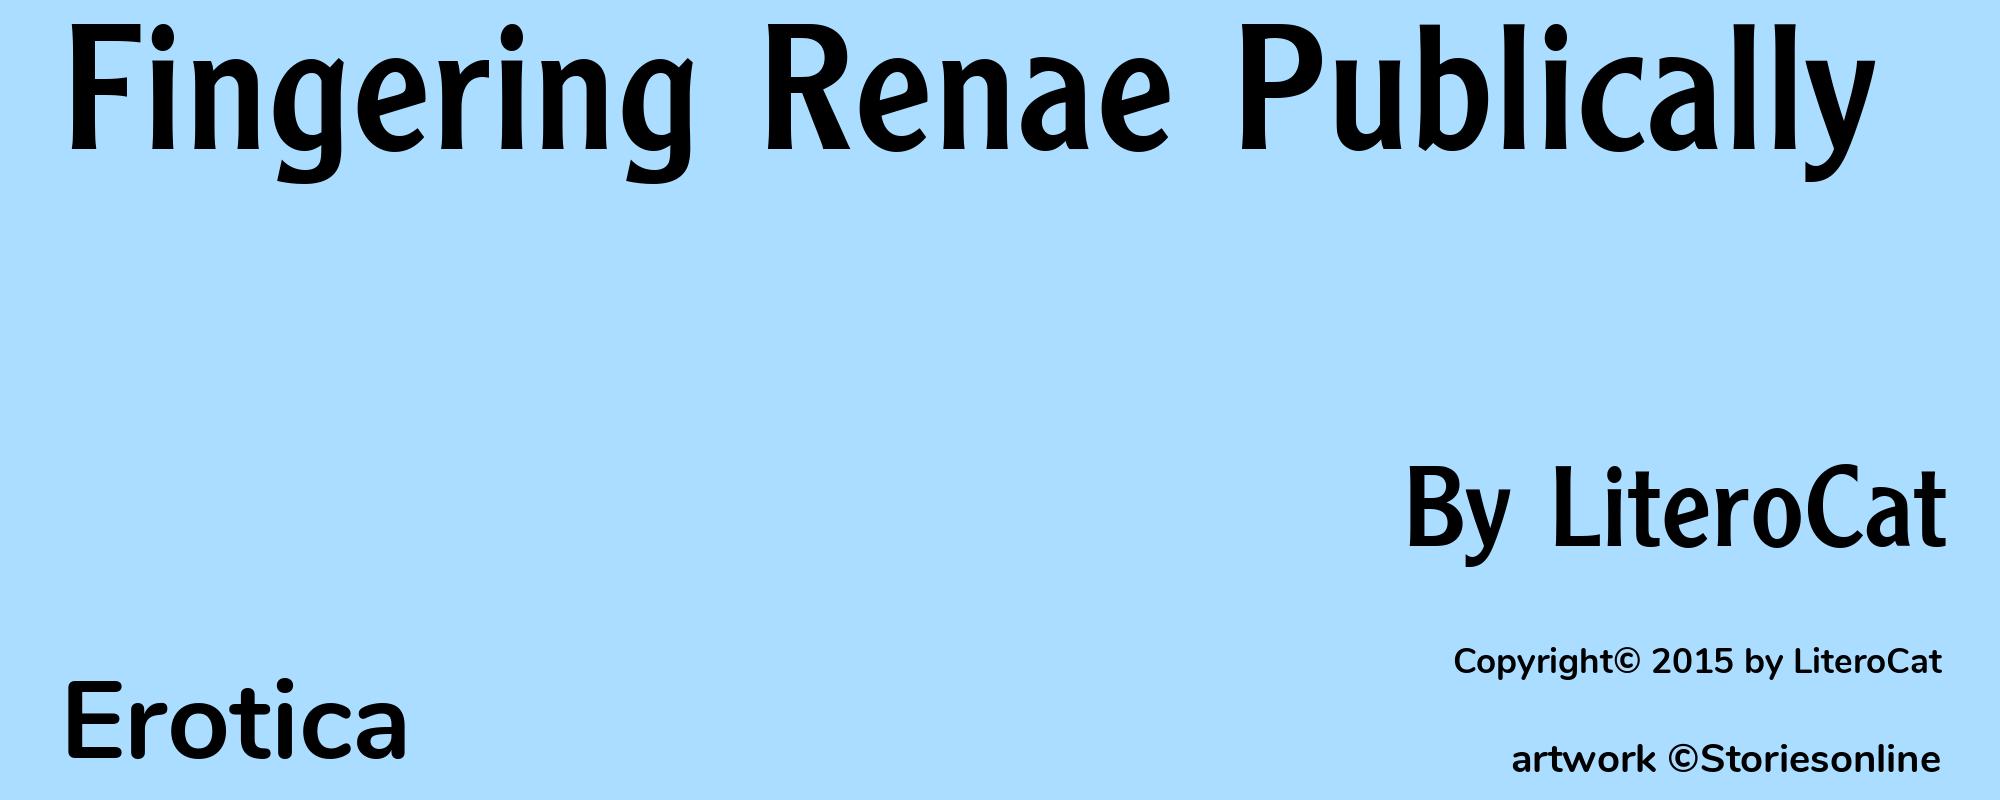 Fingering Renae Publically - Cover